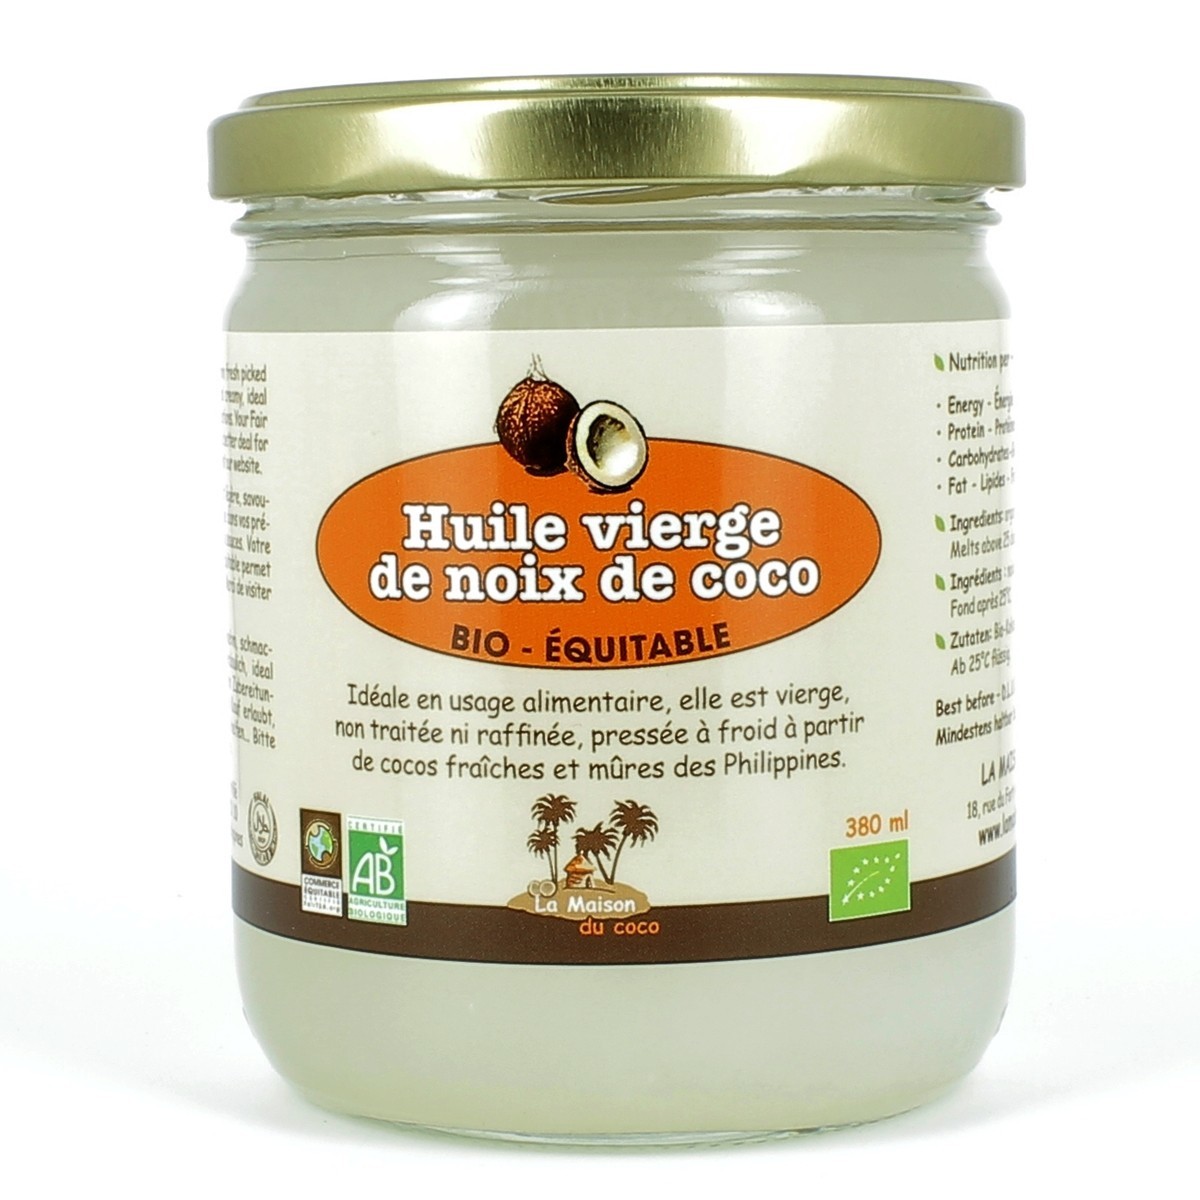 Huile vierge de coco bio & équitable - 380 ml